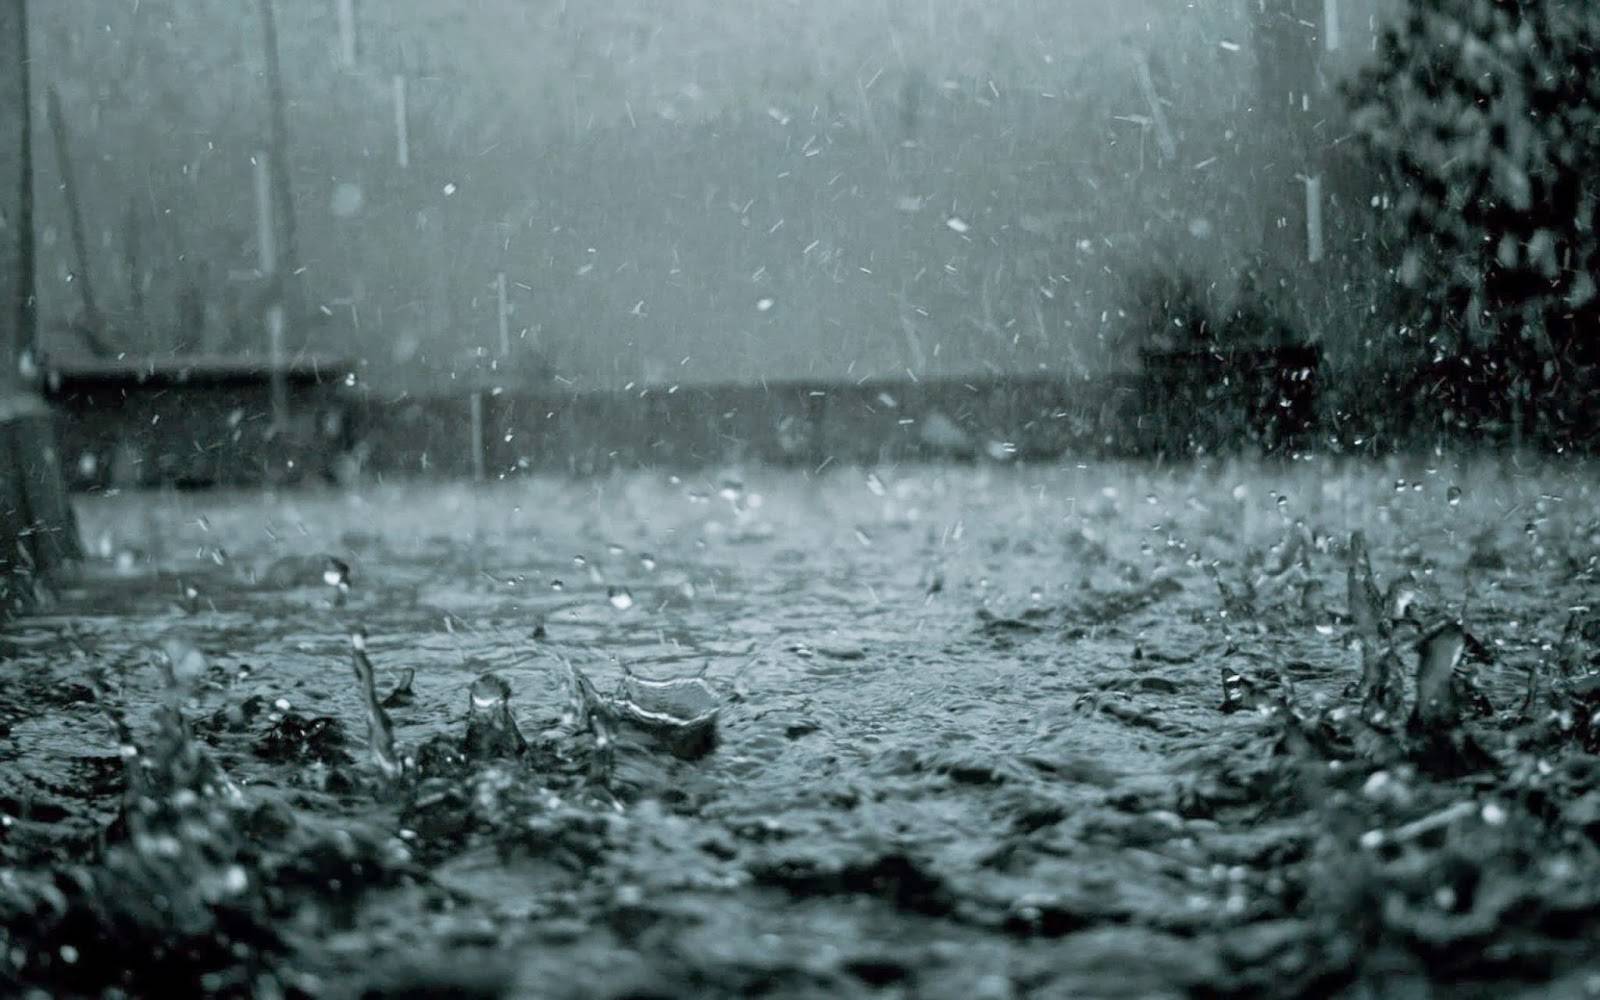 4k唯美下雨雨伞、雨滴打在雨伞上_4096X2160_高清视频素材下载(编号:4777770)_实拍视频_光厂(VJ师网) www.vjshi.com